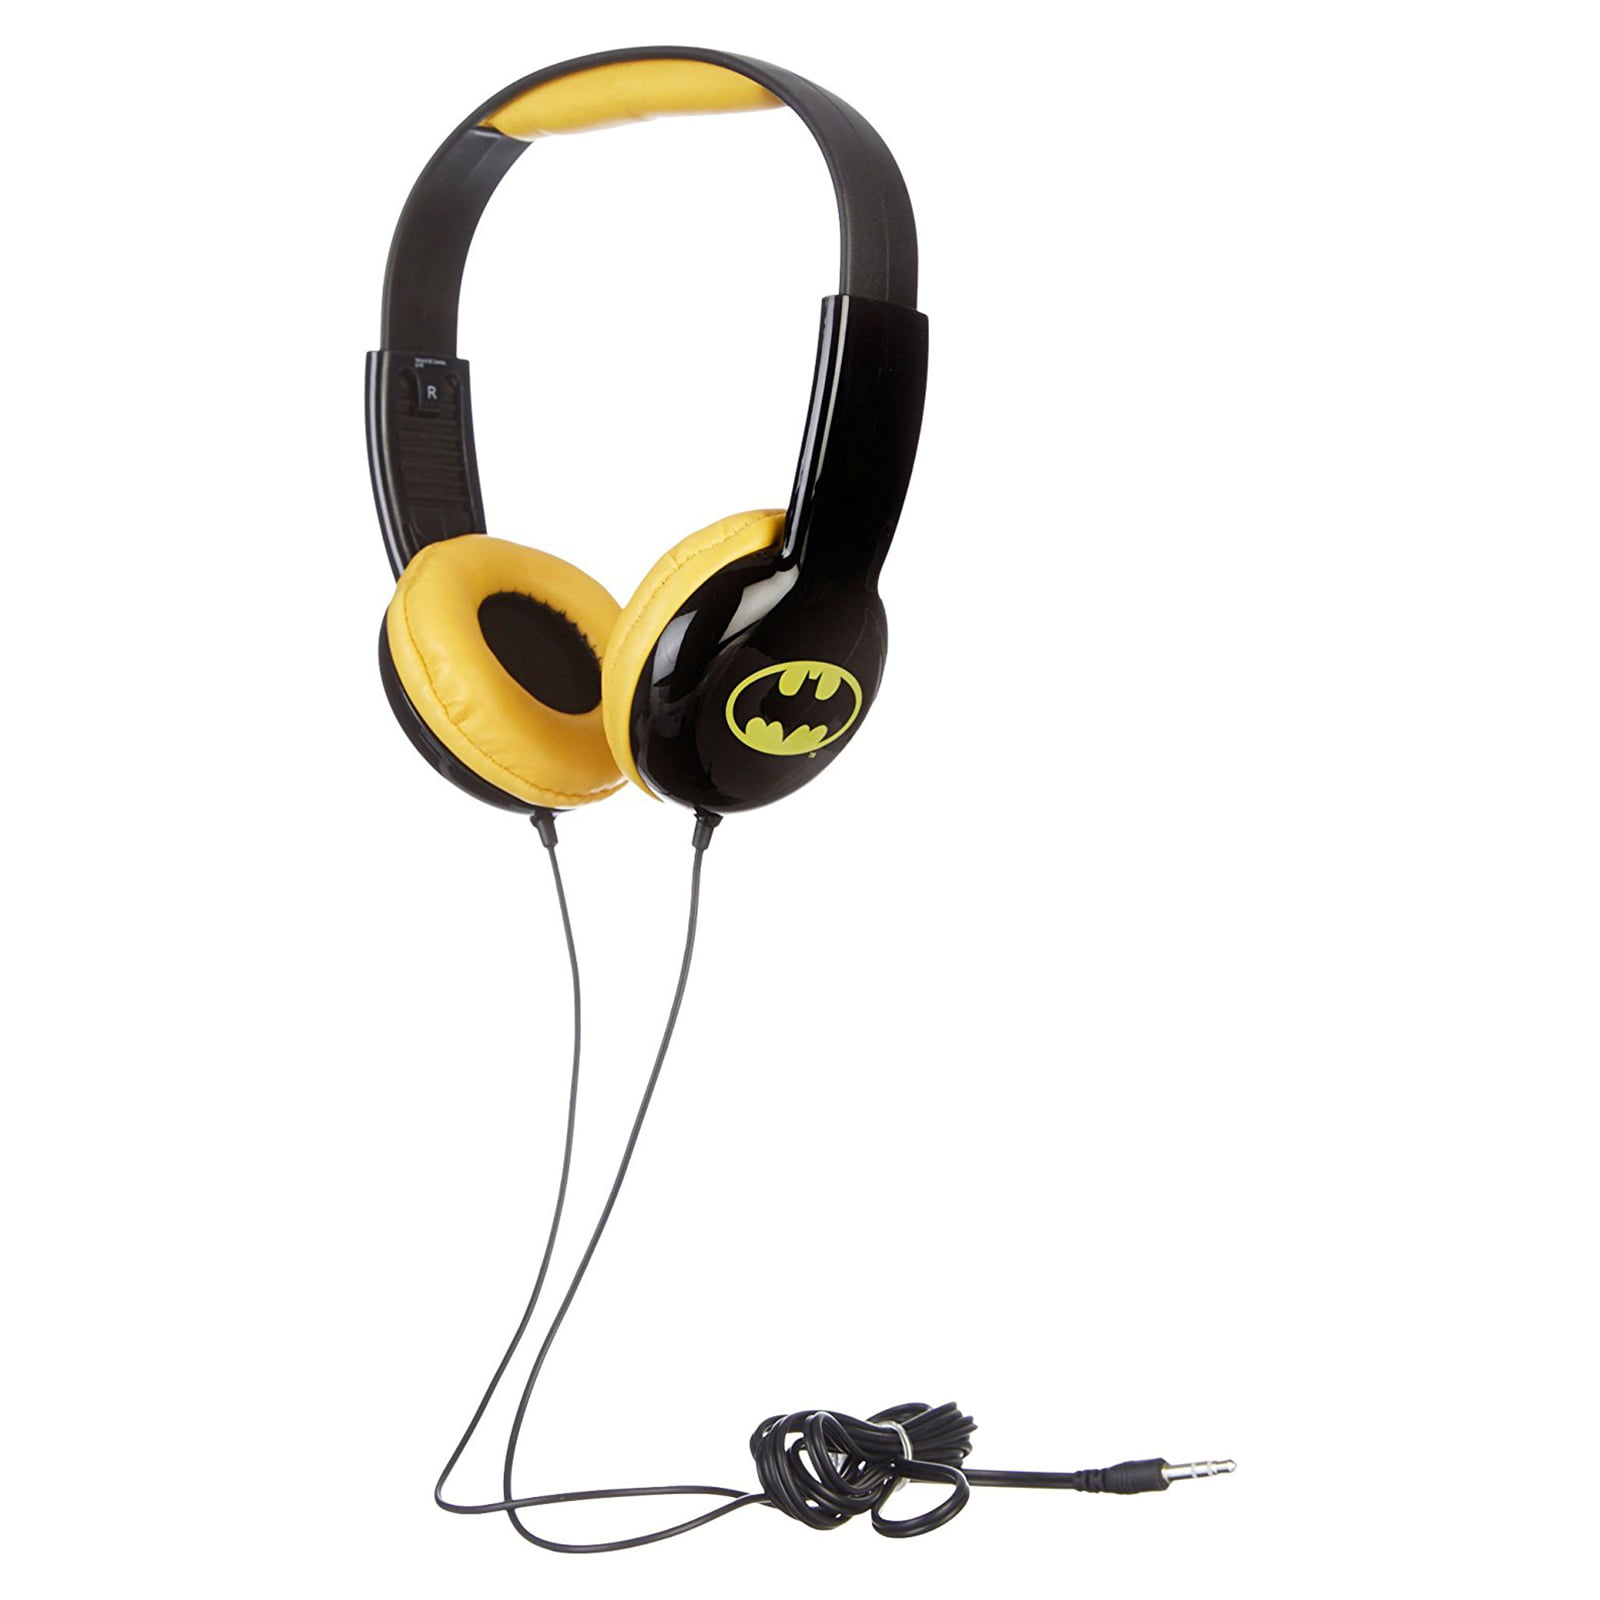 Sakar Children's Noise-Canceling Over-Ear Headphones, Yellow, HP2-03082 -  Walmart.com